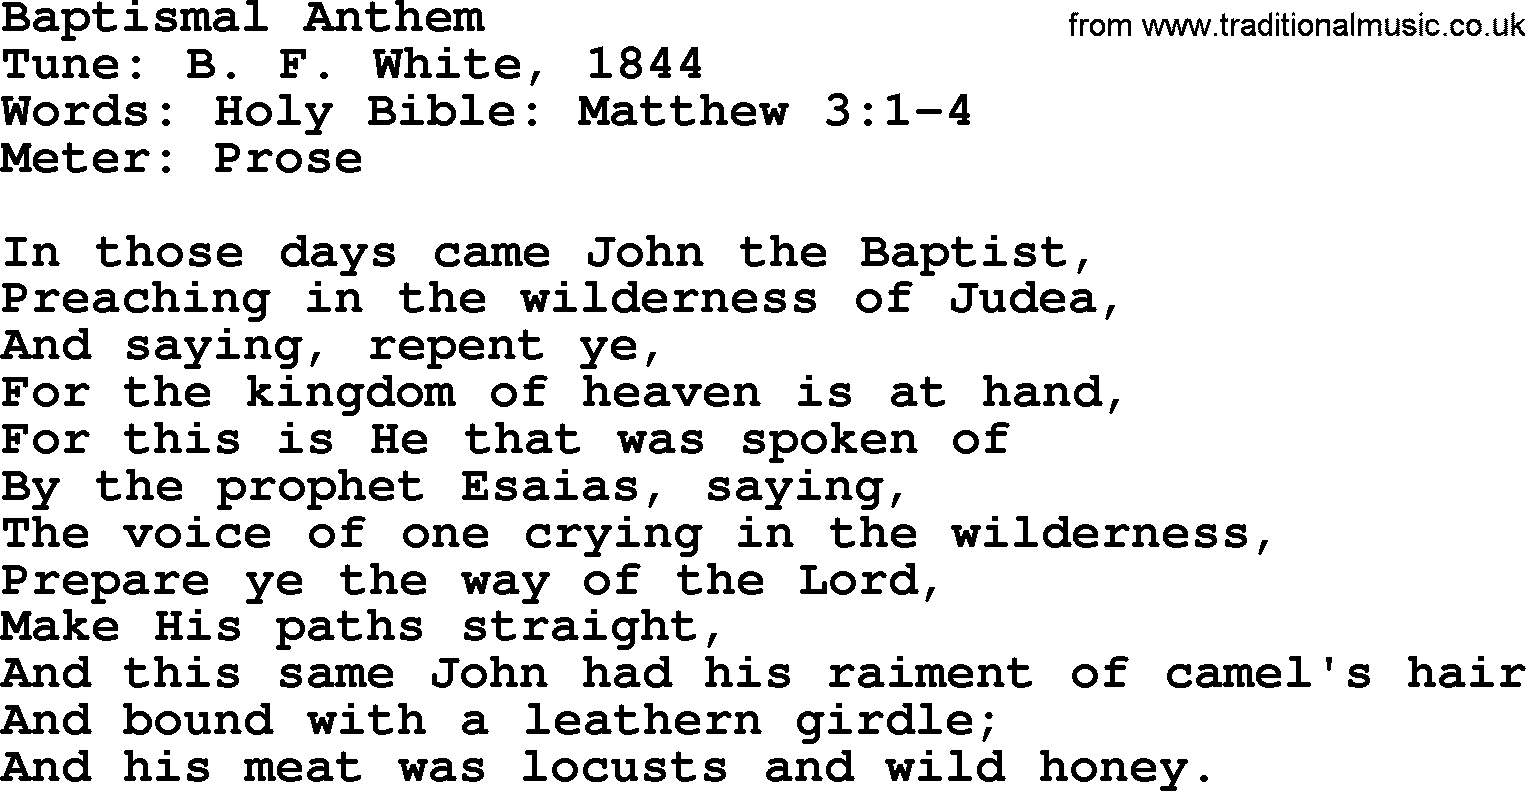 Sacred Harp songs collection, song: Baptismal Anthem, lyrics and PDF